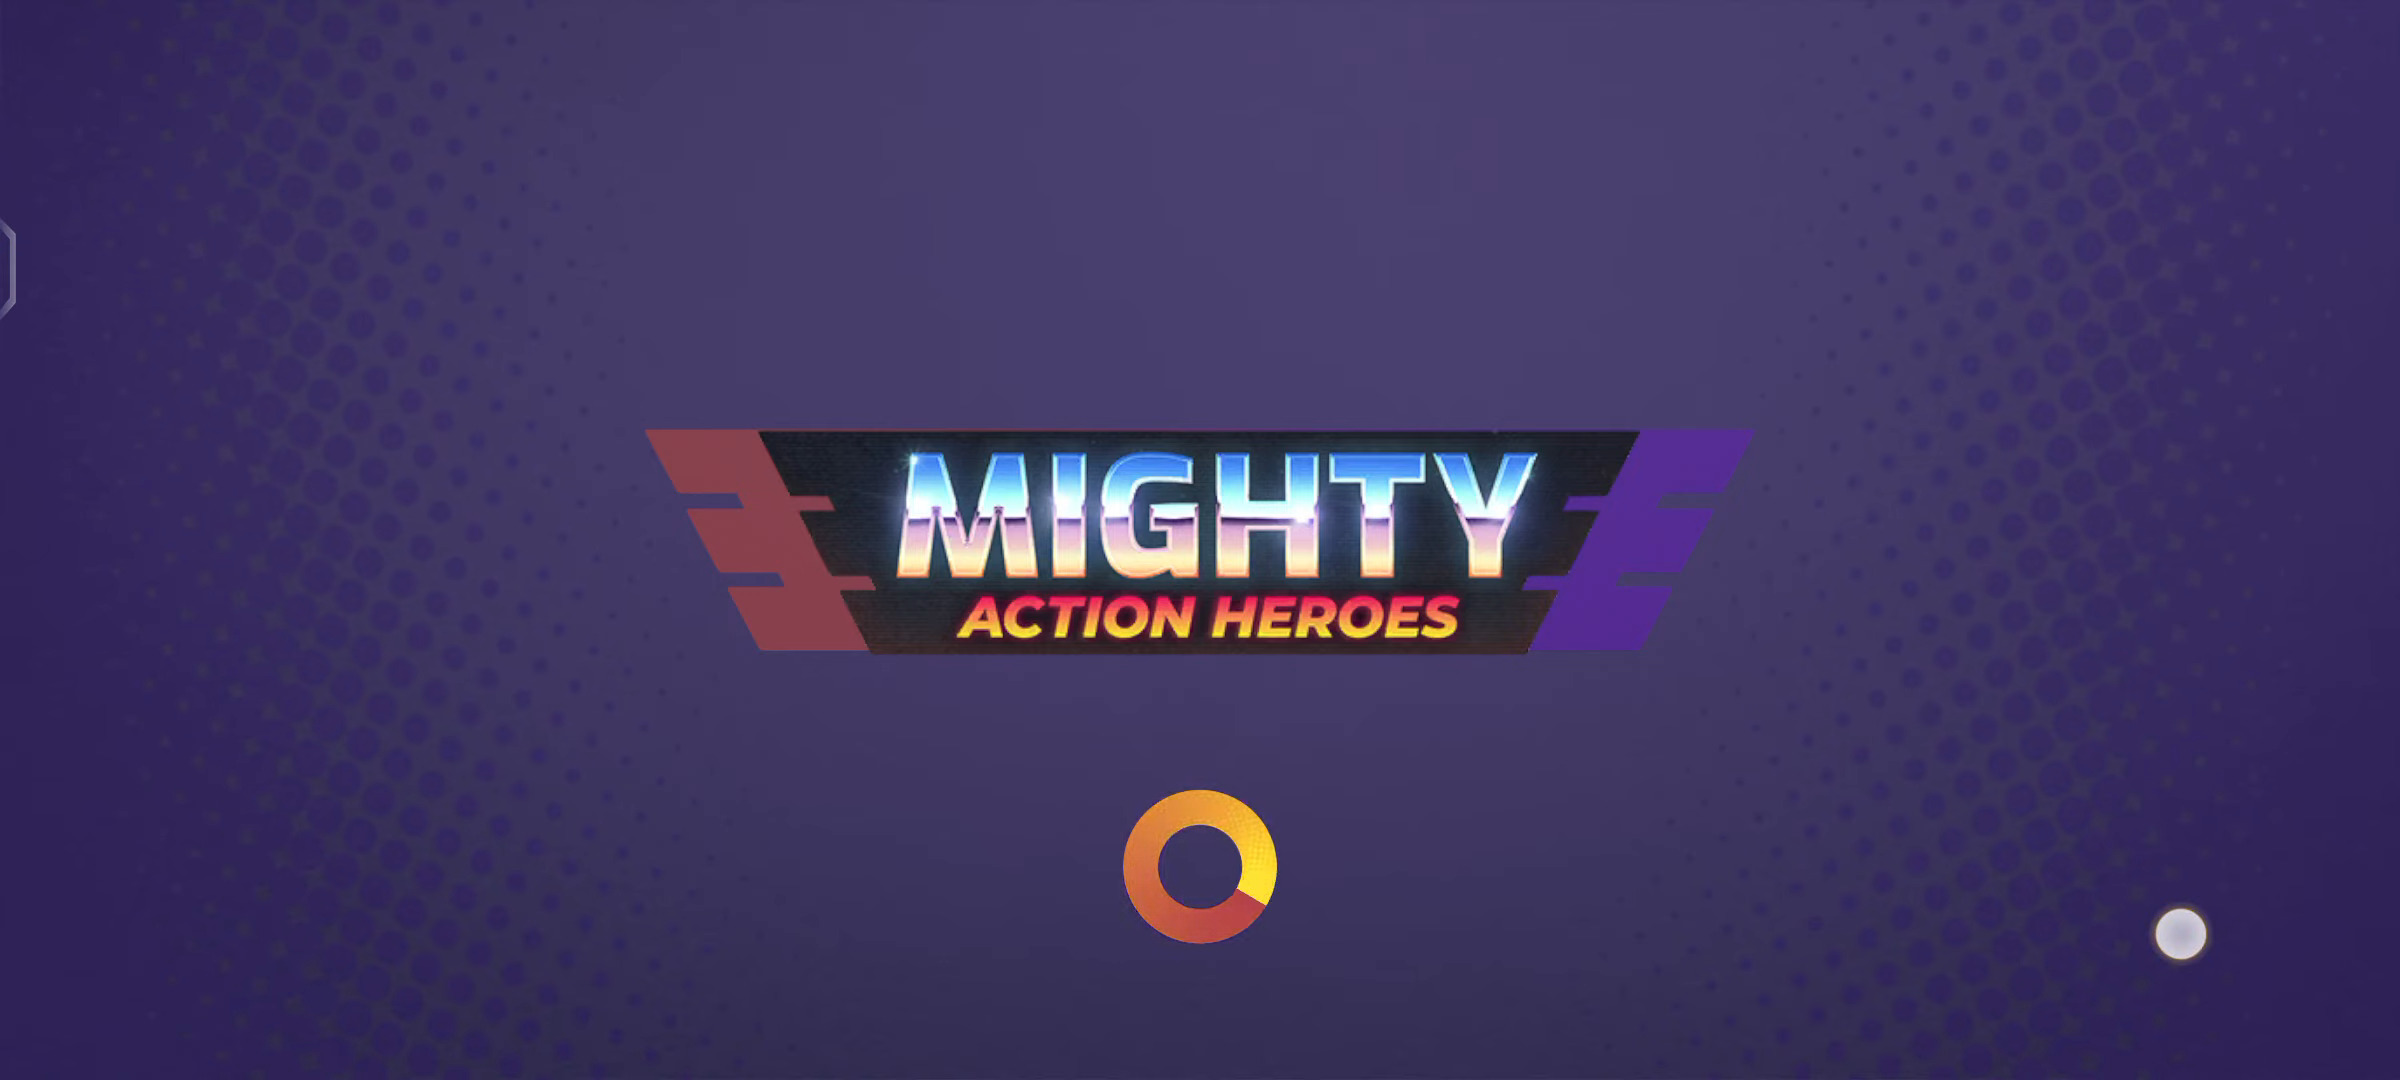 Download Mighty Action Heroes für Android kostenlos.